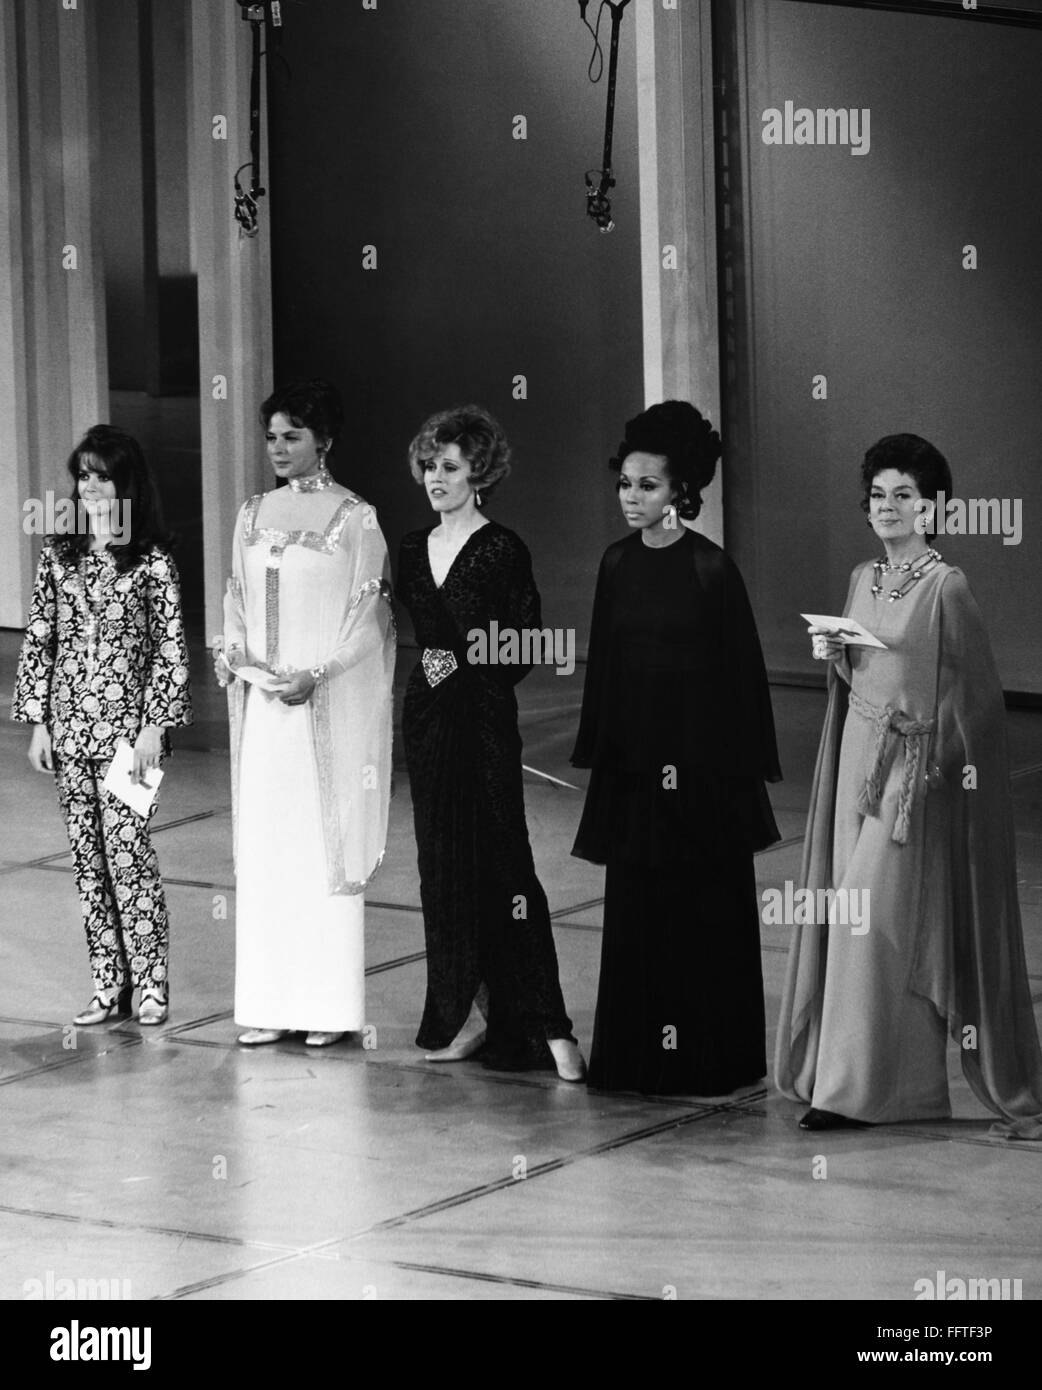 ACADEMY AWARDS, c1970./nFrom left: Natalie Wood, Ingrid Bergman, Jane Fonda, Diahann Carroll and Rosalind Russell at the Oscars, c1970. Stock Photo